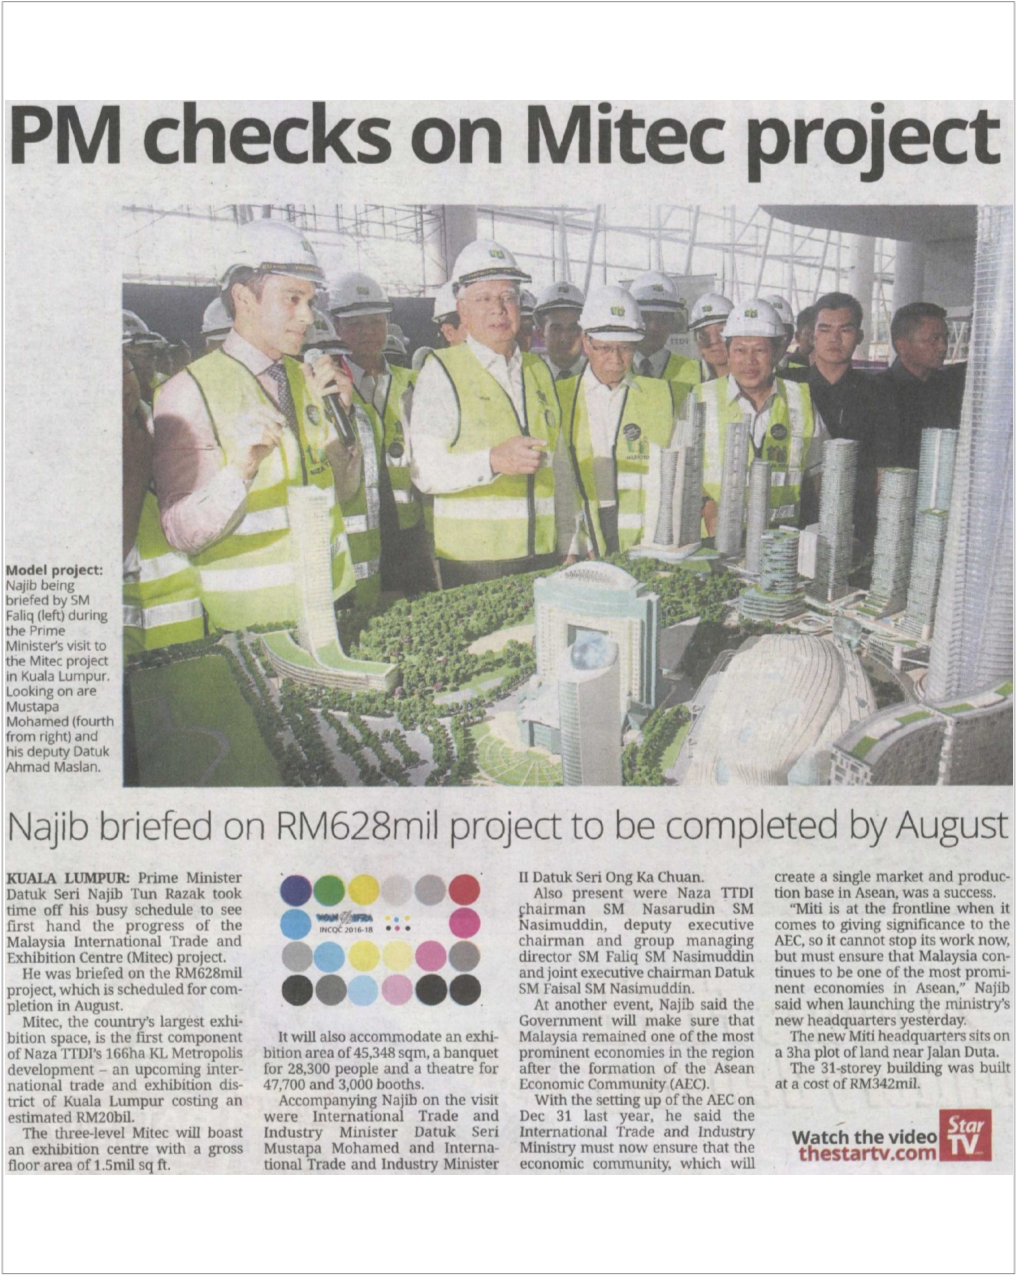 PM Checks on Mitec Project